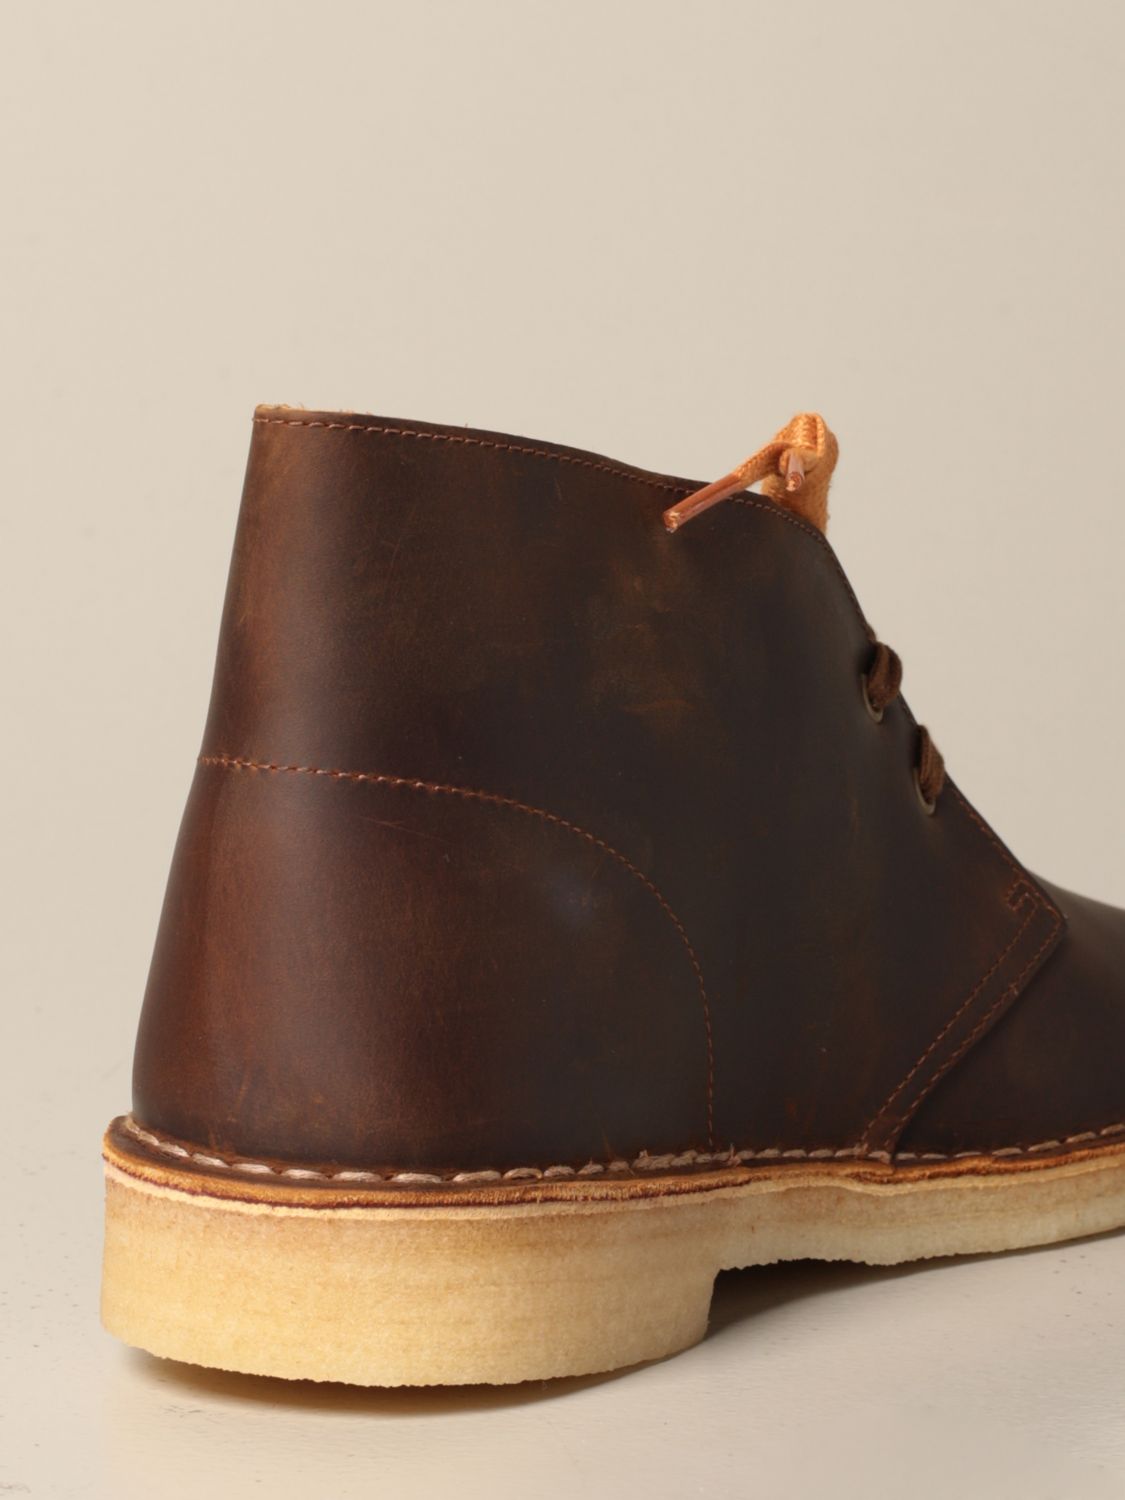 clarks desert boot brown vintage leather